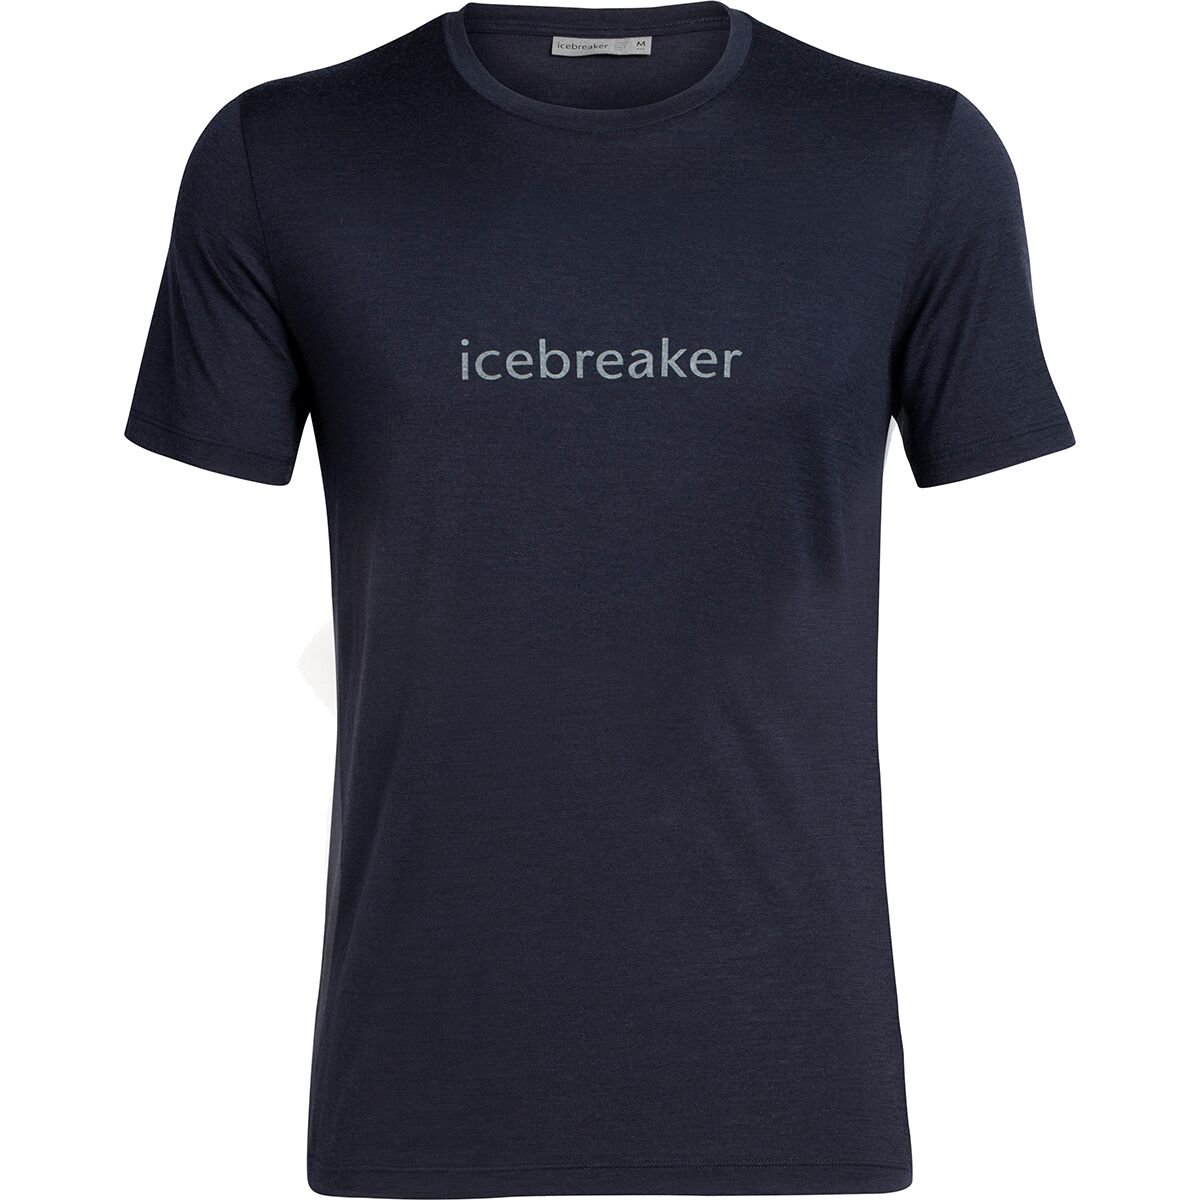 Icebreaker Wordmark Logo Short-Sleeve Crew Shirt - Men's